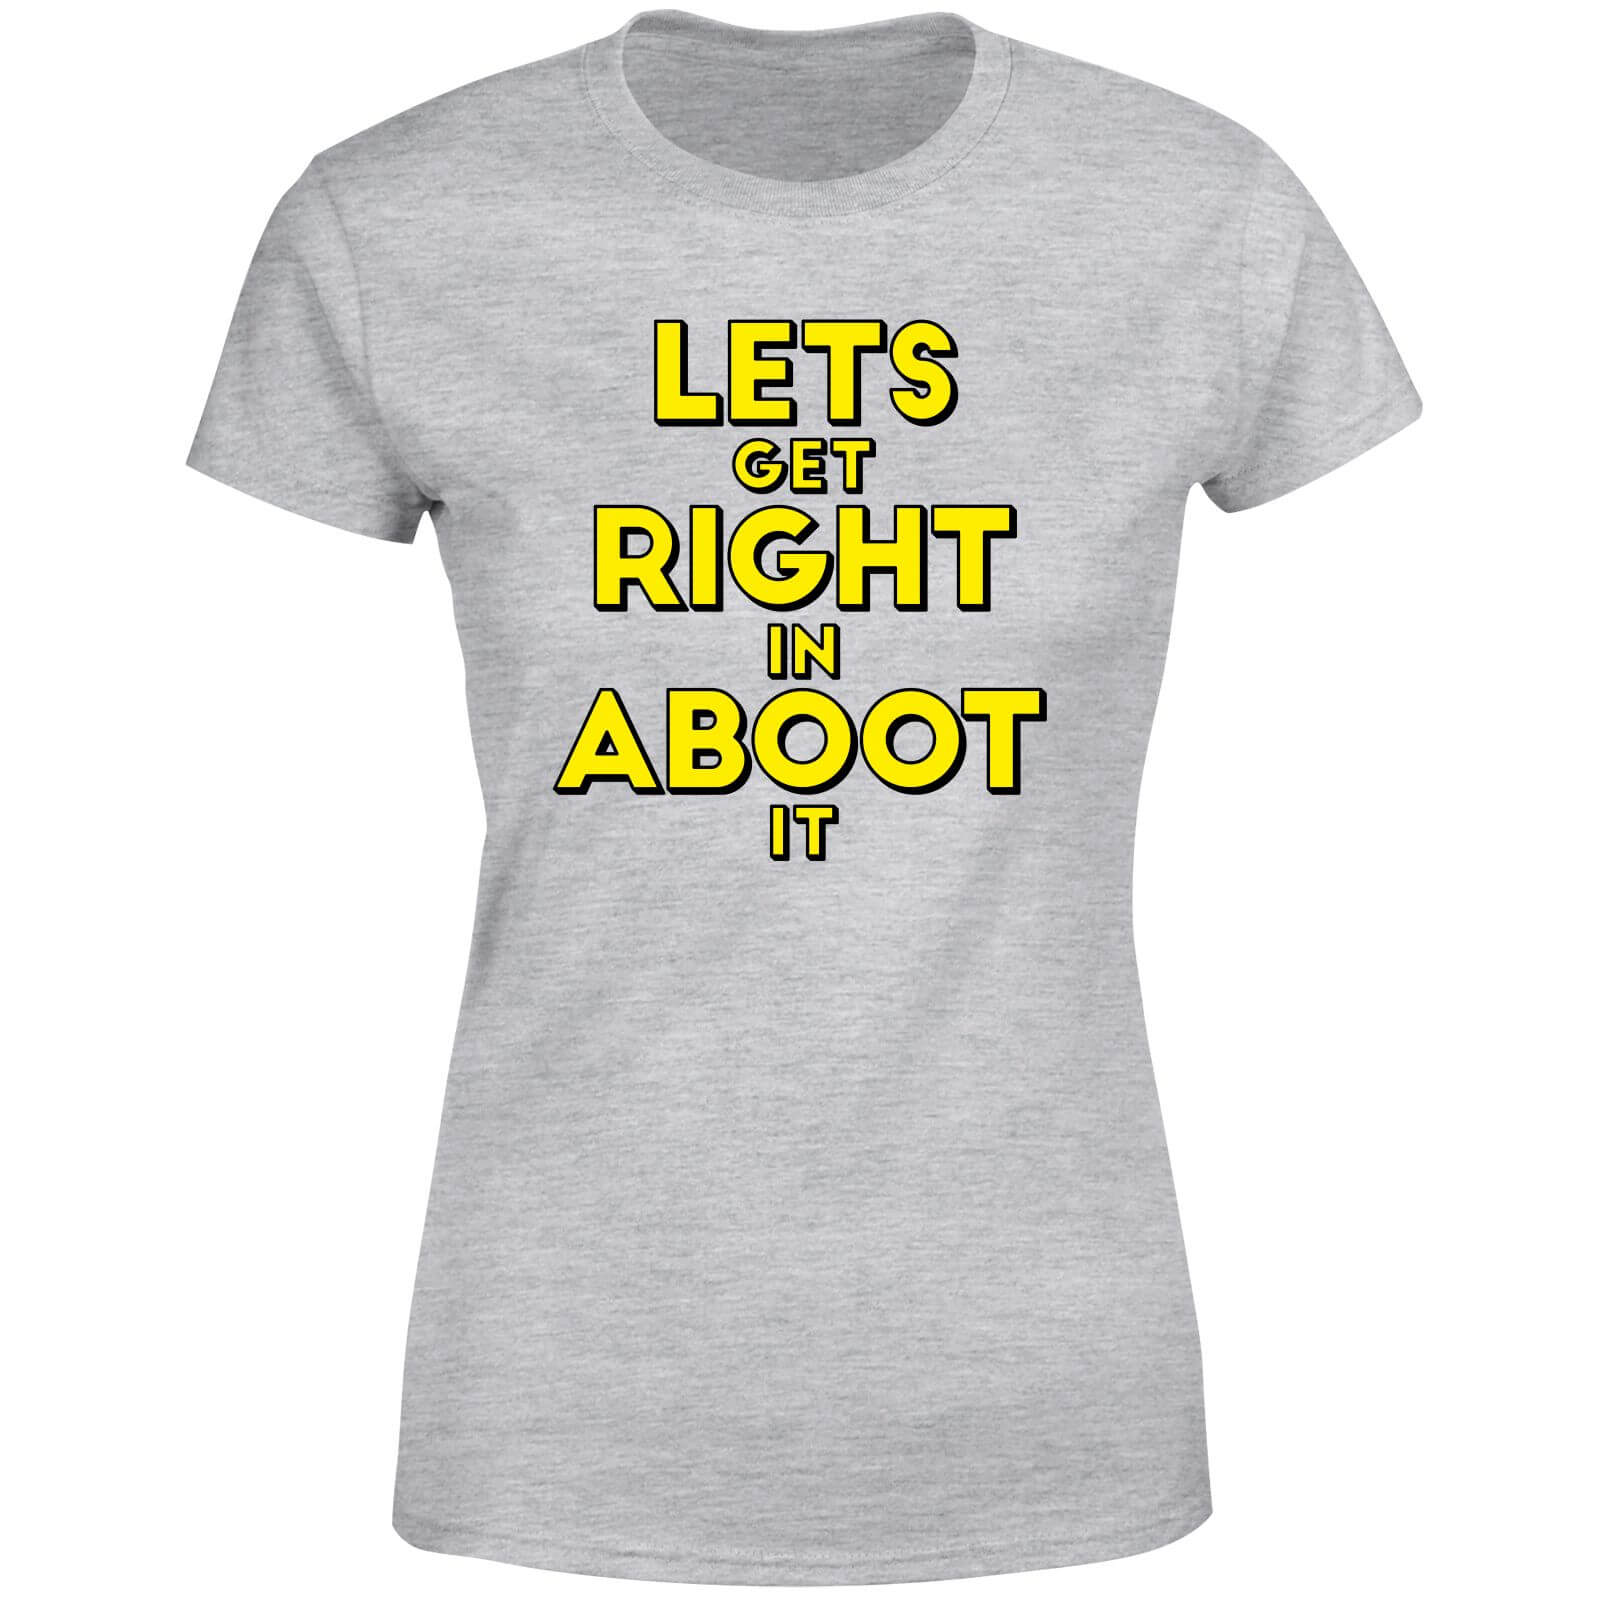 let's get right in aboot it women's t-shirt - grey - 3xl - grijs